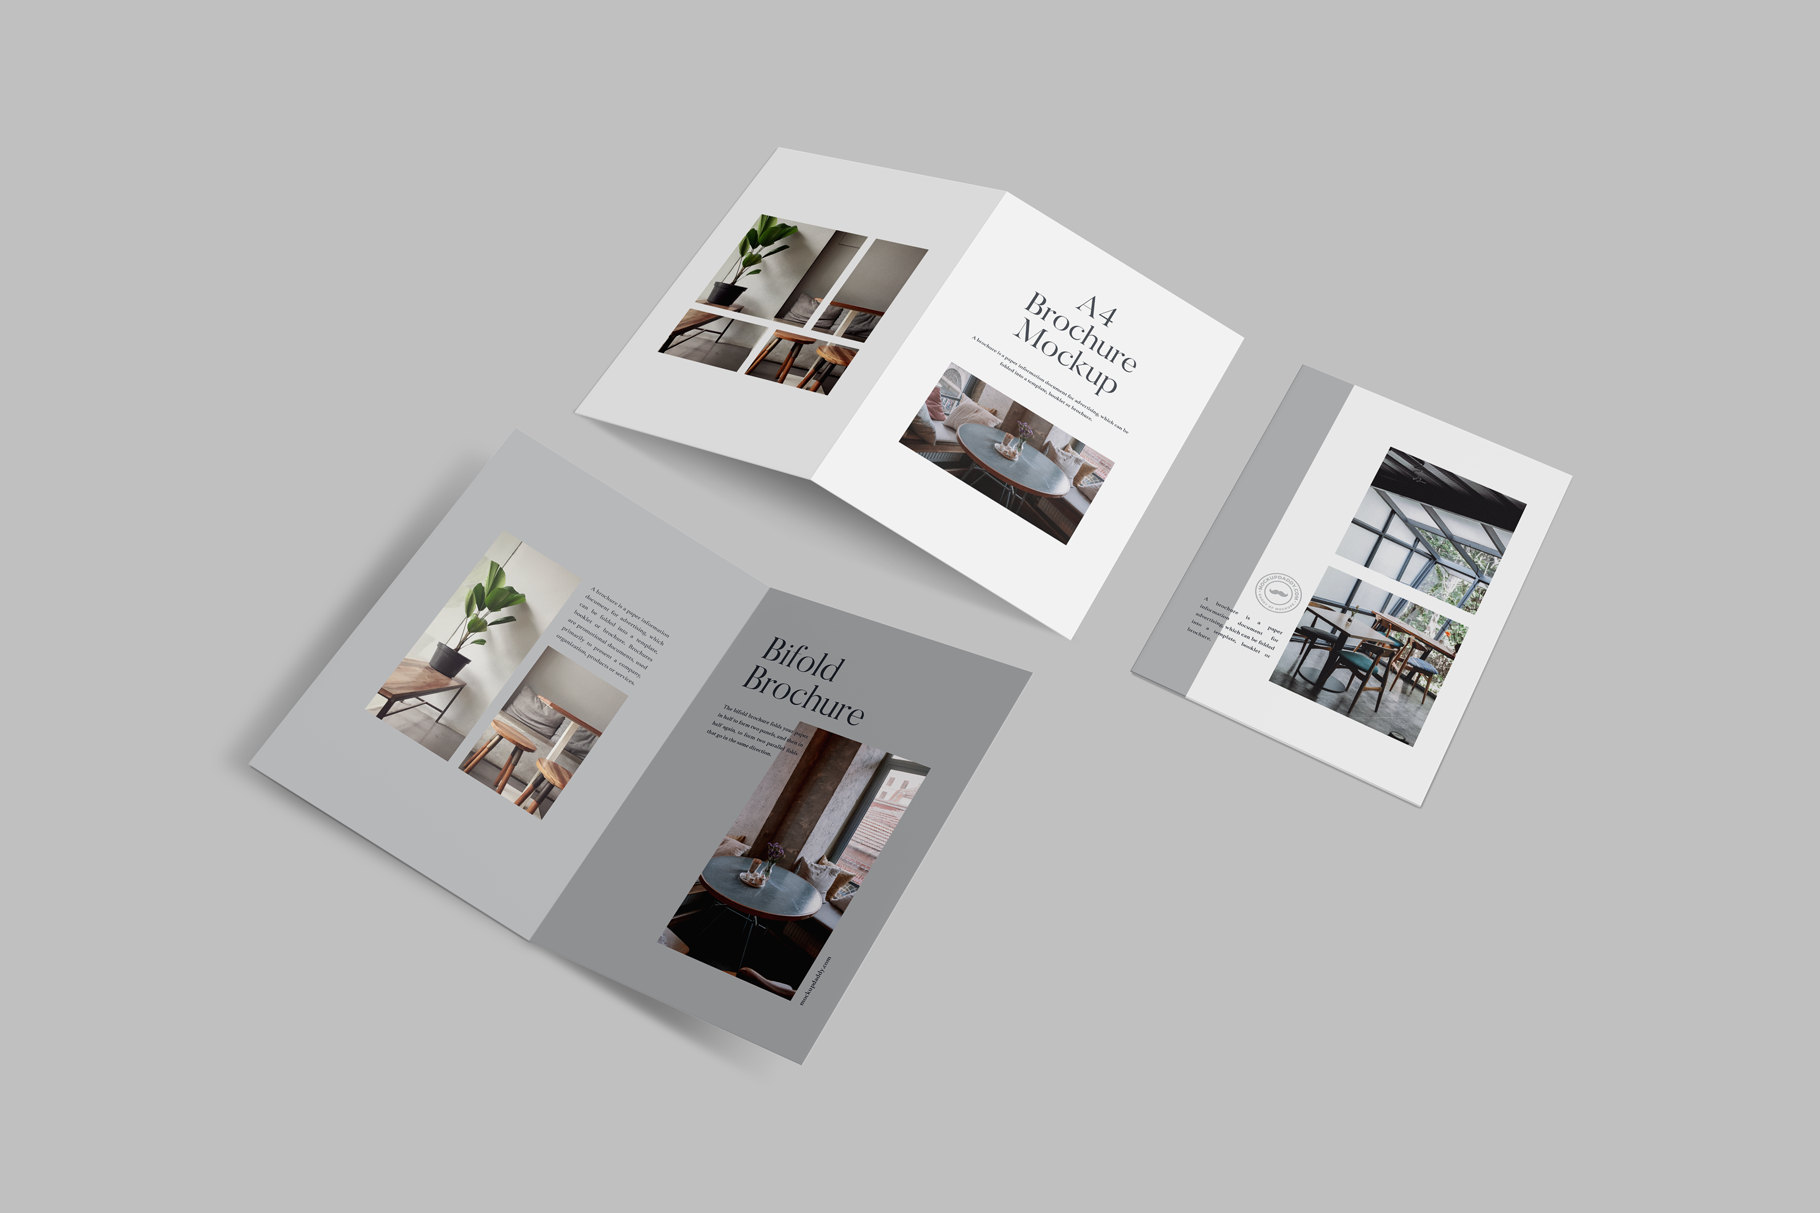 Editable A4 bi-fold brochure mockup with colorful design